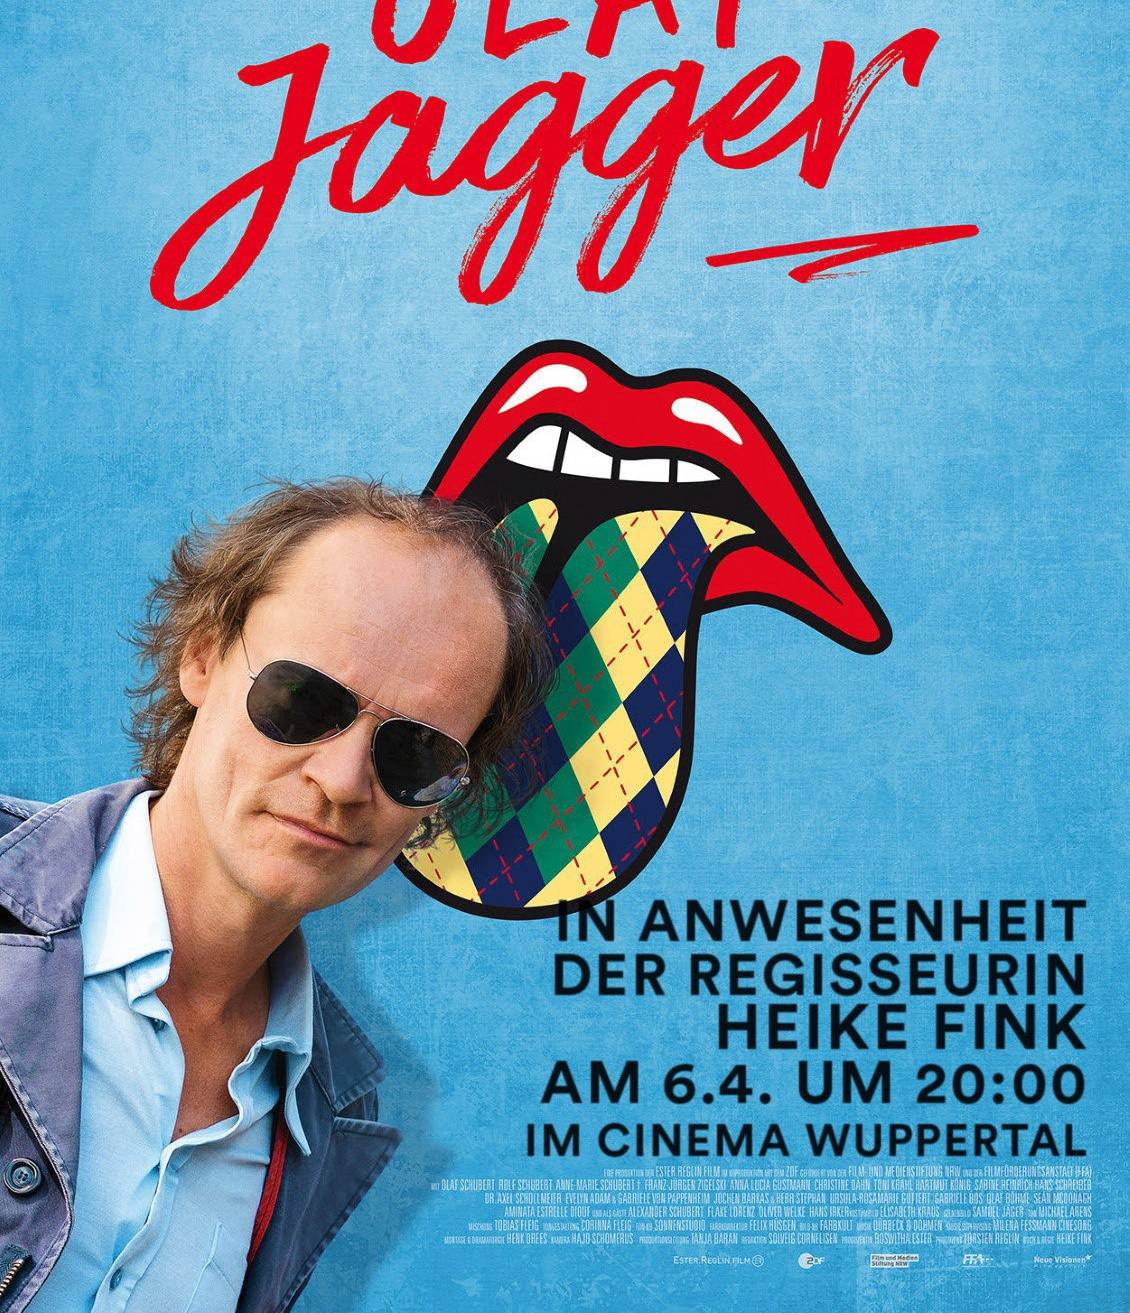 „Olaf Jagger“: Regisseurin Heike Fink im Cinema